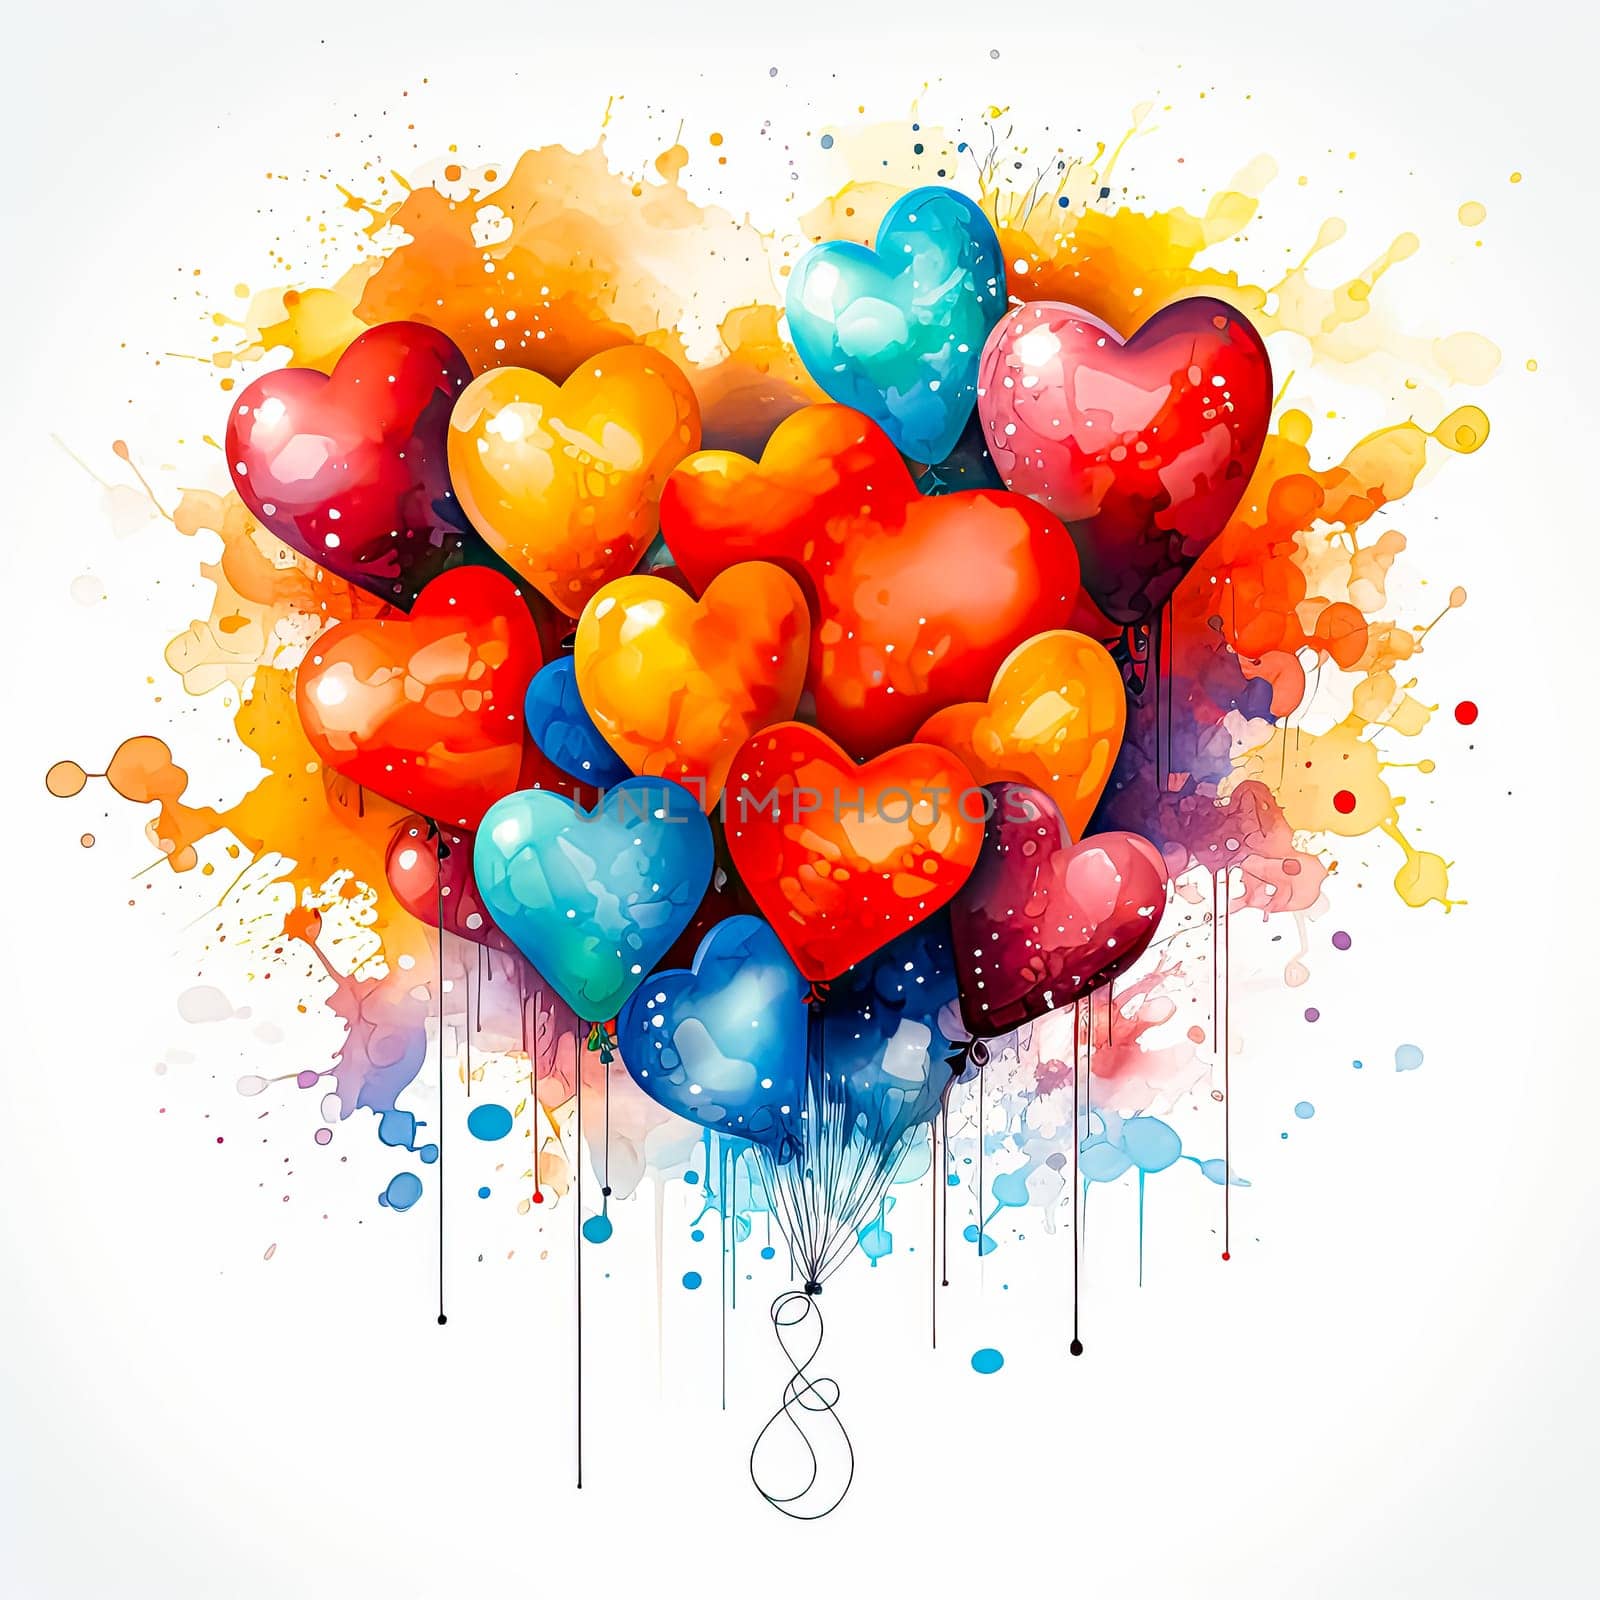 A watercolor heart image, vibrant and tender by Alla_Morozova93